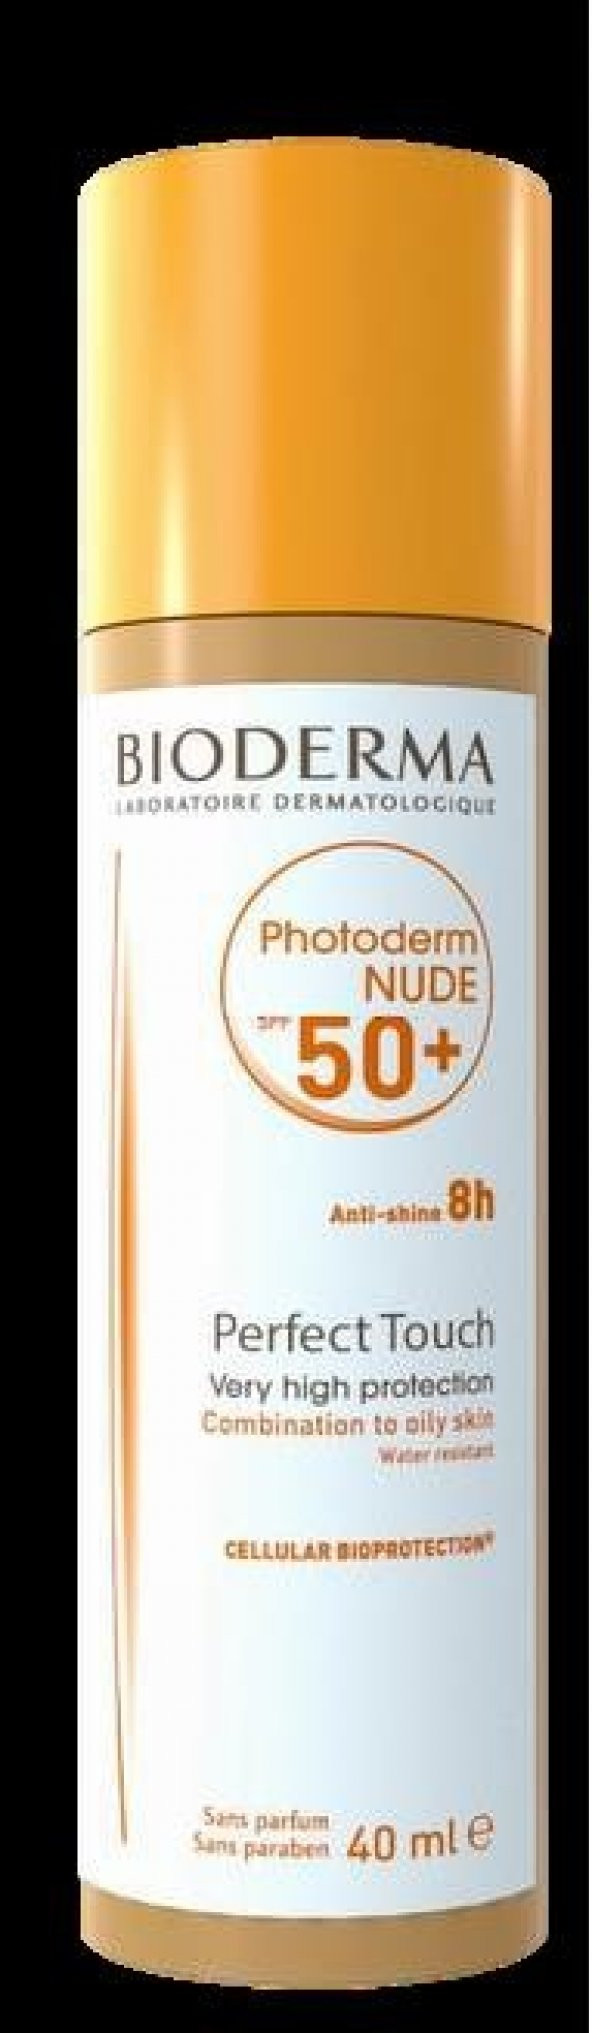 Bioderma Photoderm Nude SPF 50+ Golden 40 ml SKT:08.2020